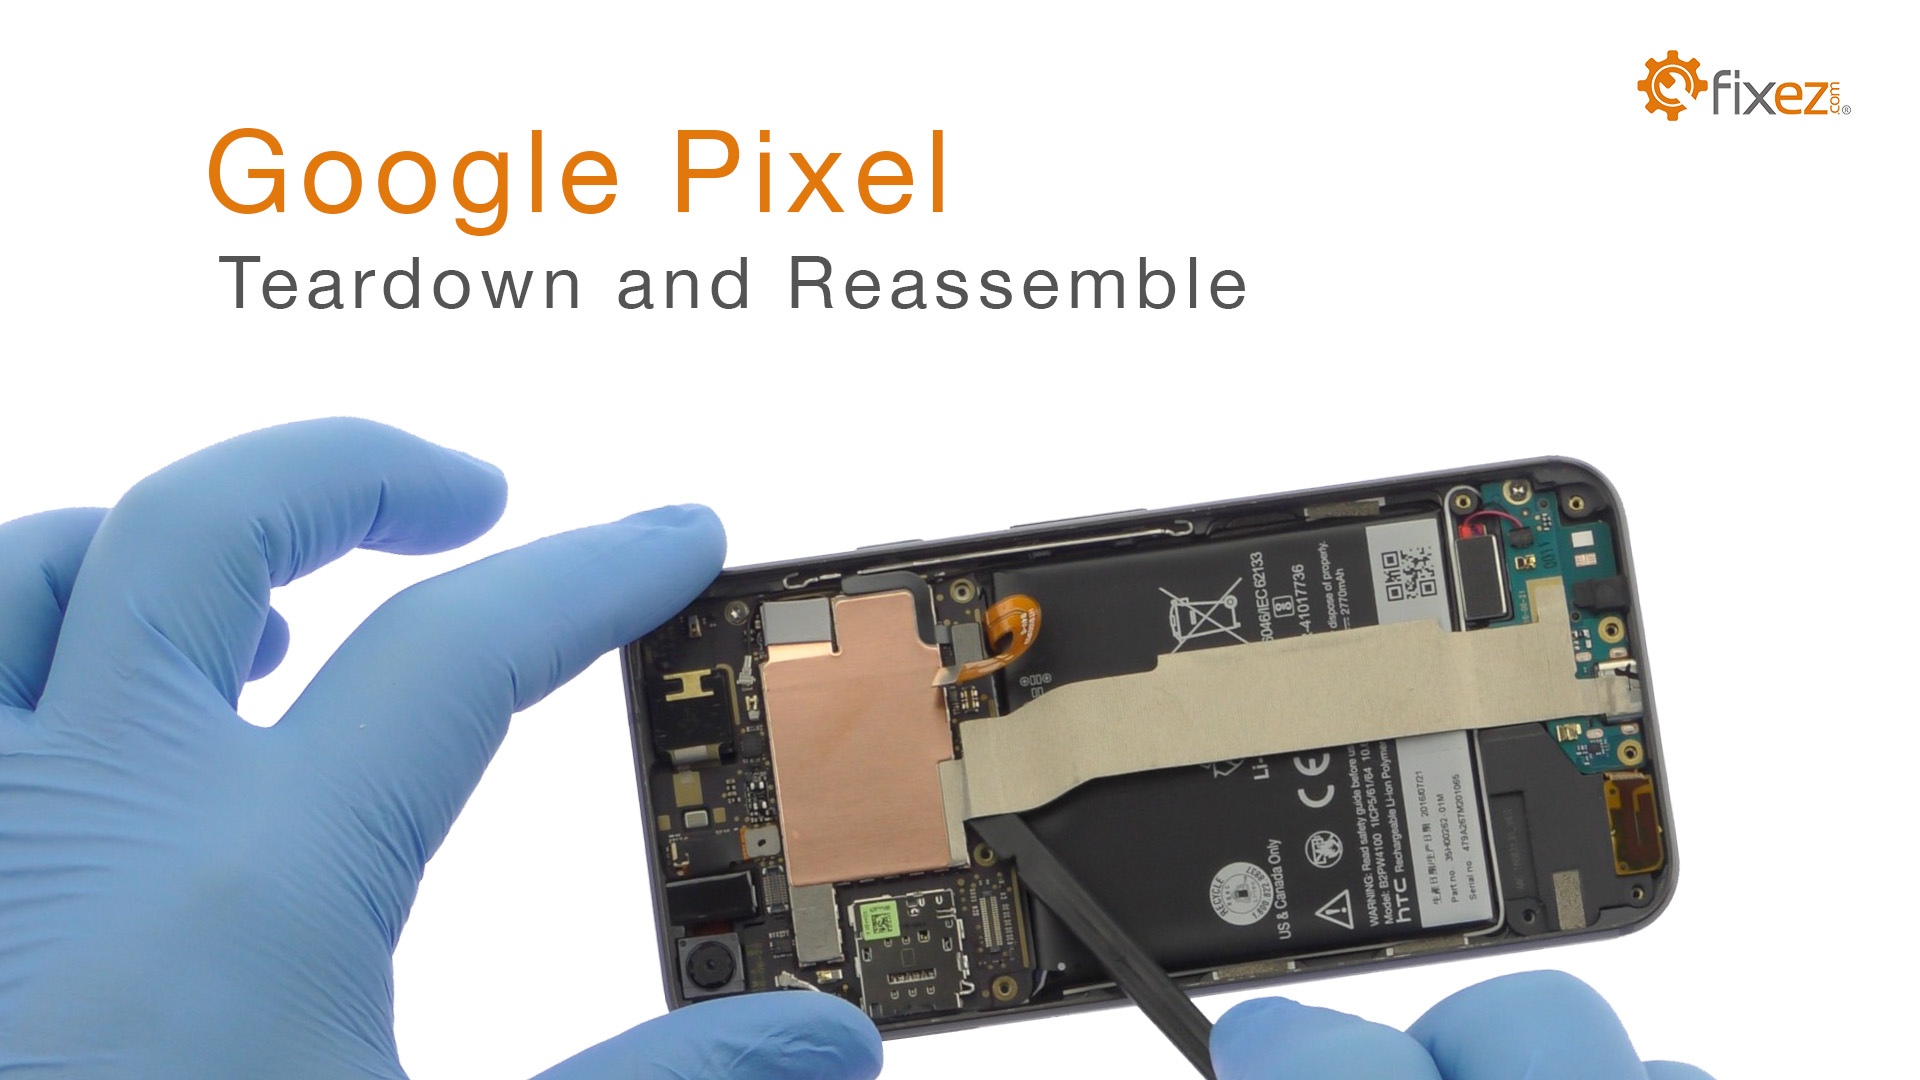 Google Pixel Teardown and Reassemble